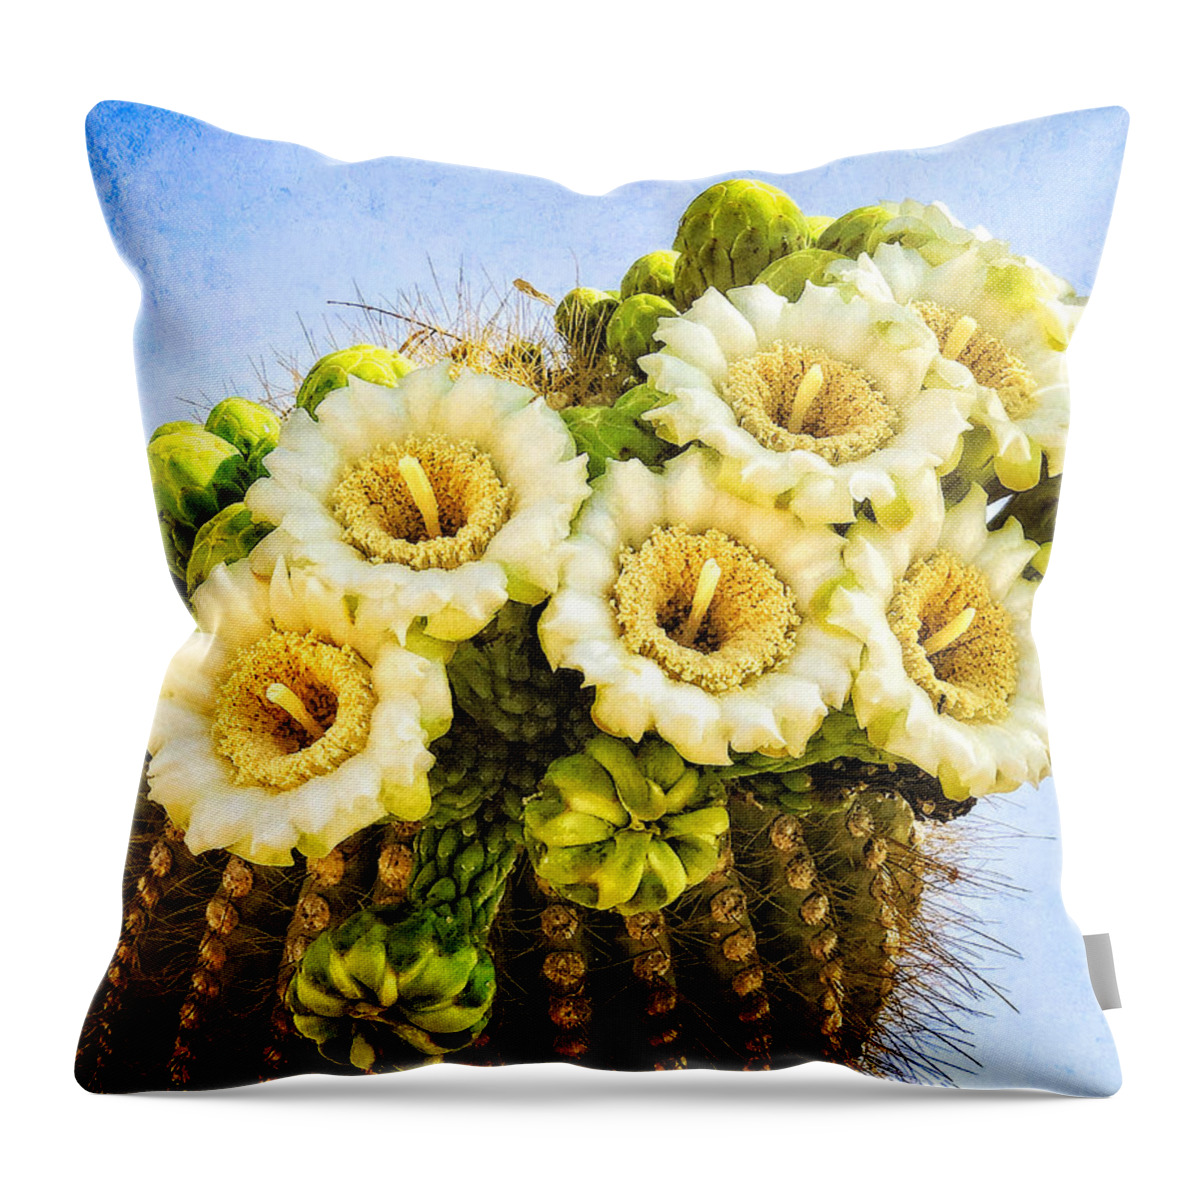 Saguaro Cactus Throw Pillow featuring the photograph Saguaro Cactus Blooms by Sandra Selle Rodriguez